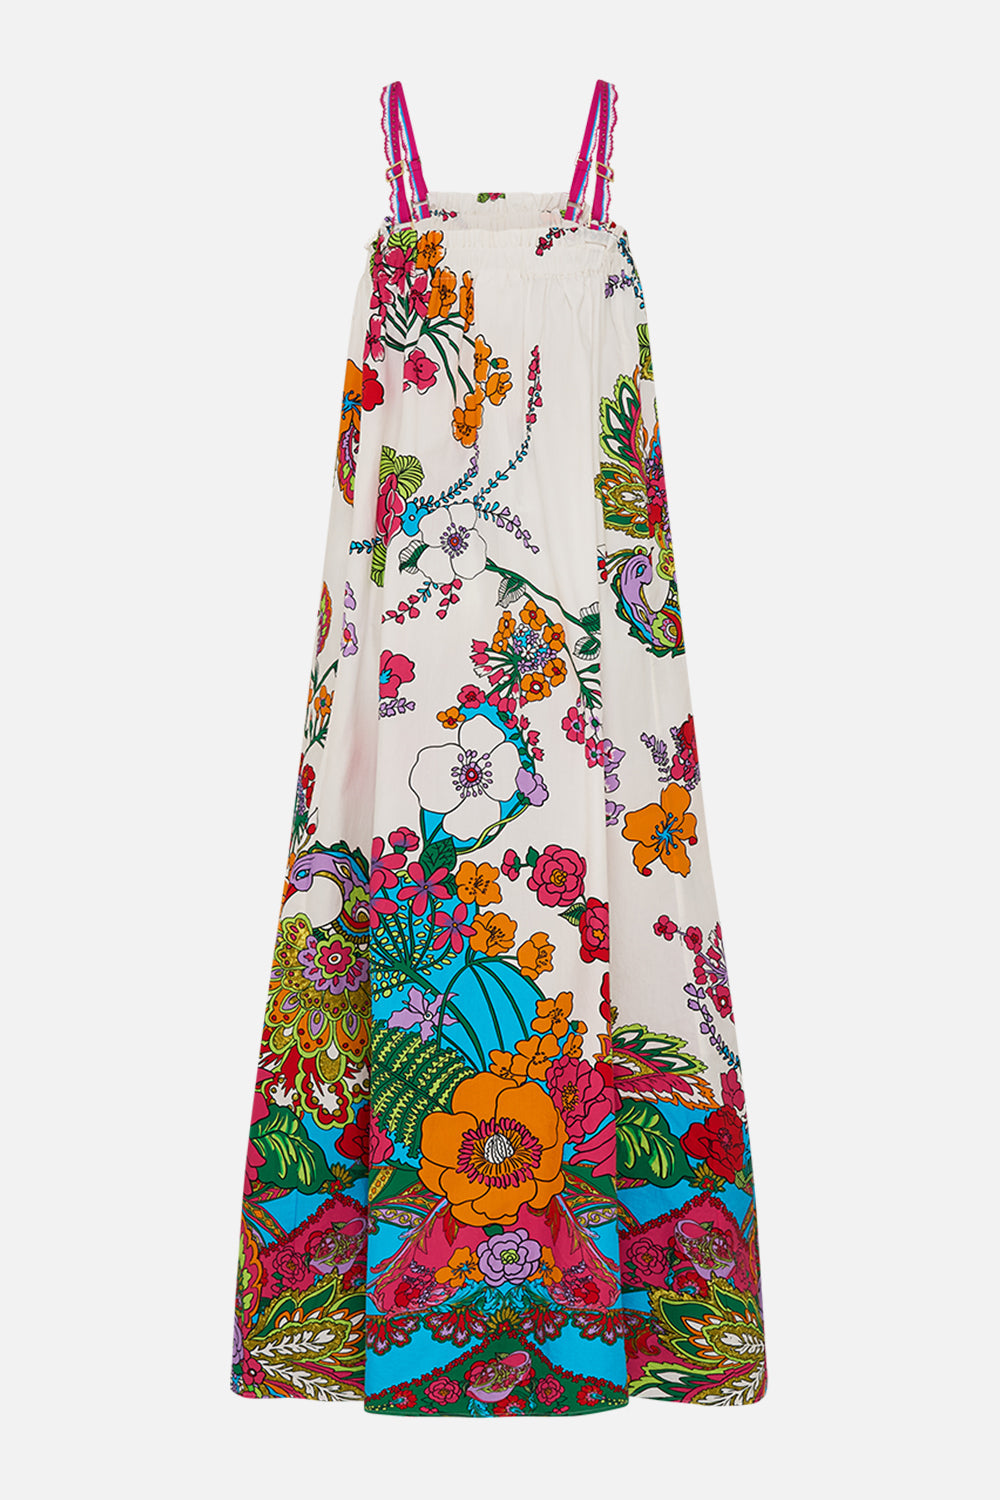 CAMILLA retro floral wide strap sun dress in Cosmic Prairie print 